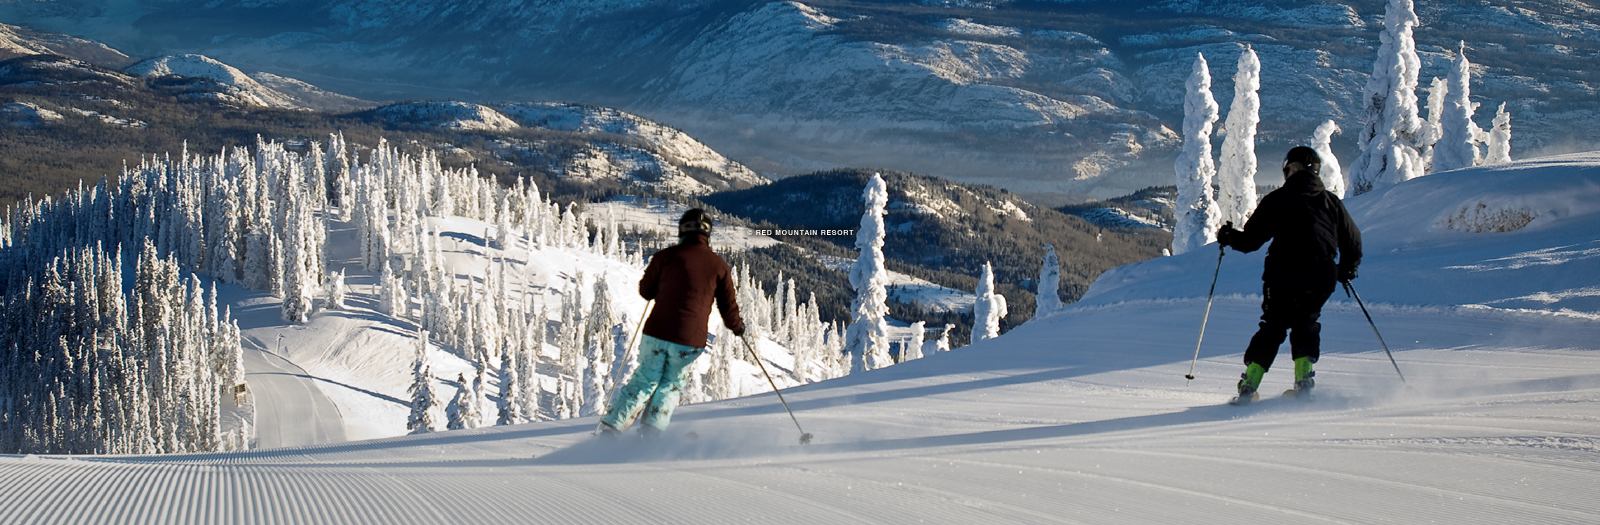 Red Mountain Ski Resort, BC, Canada, Powder Highway, ski area